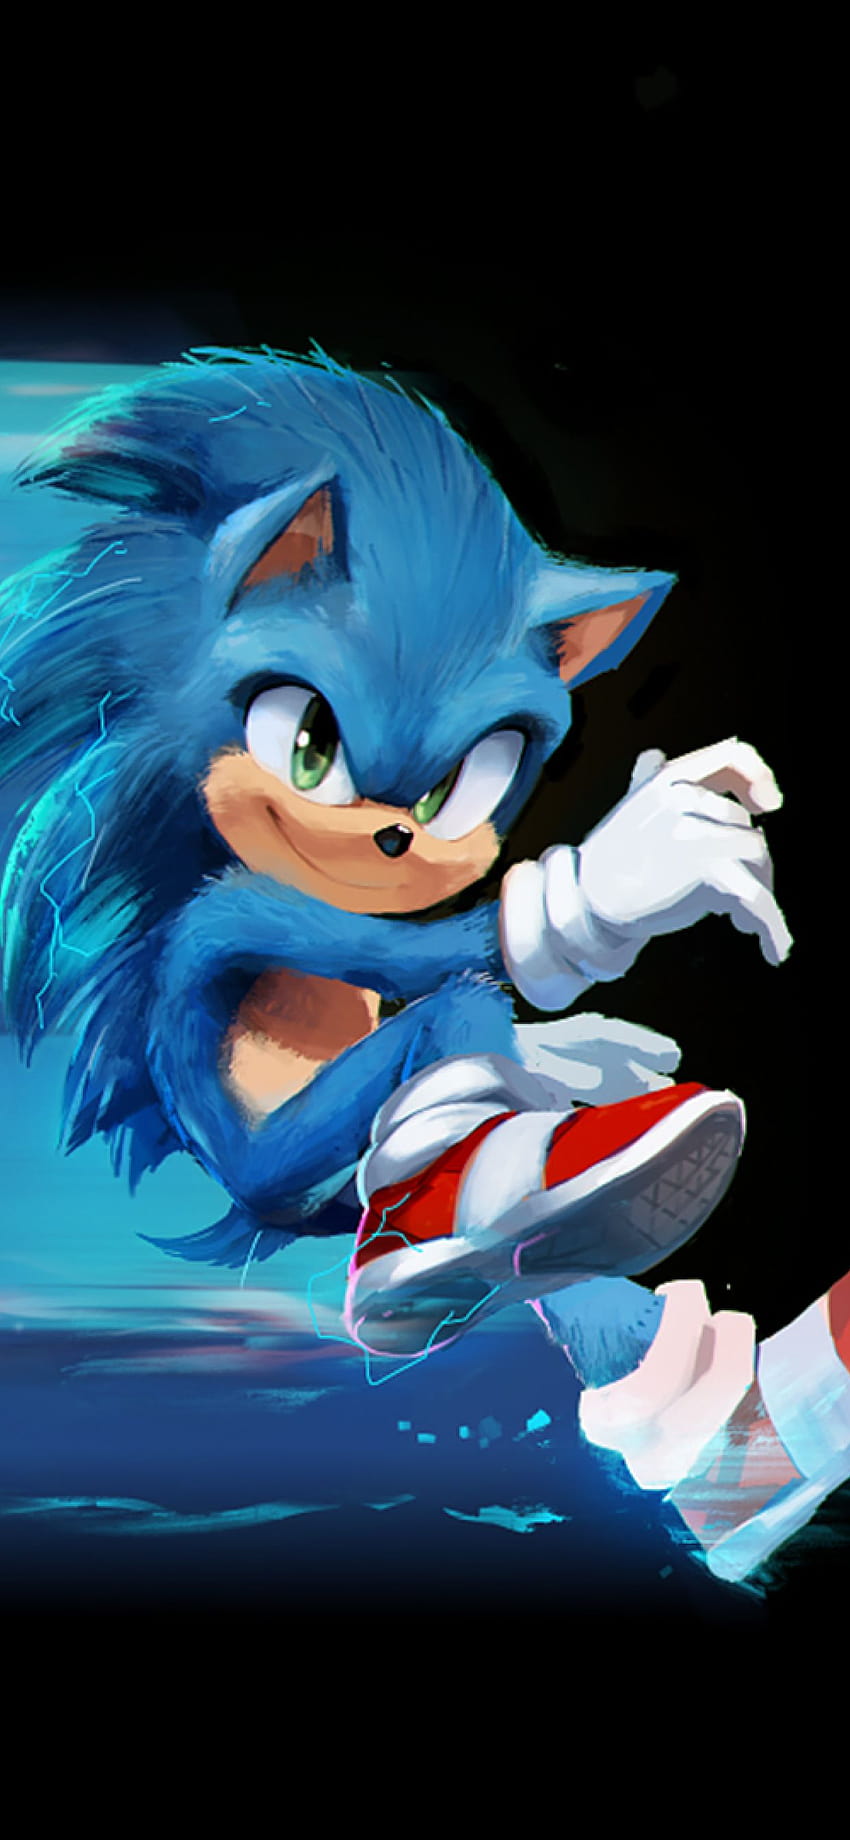 Sonic the Hedgehog 2 4k Ultra HD Wallpaper